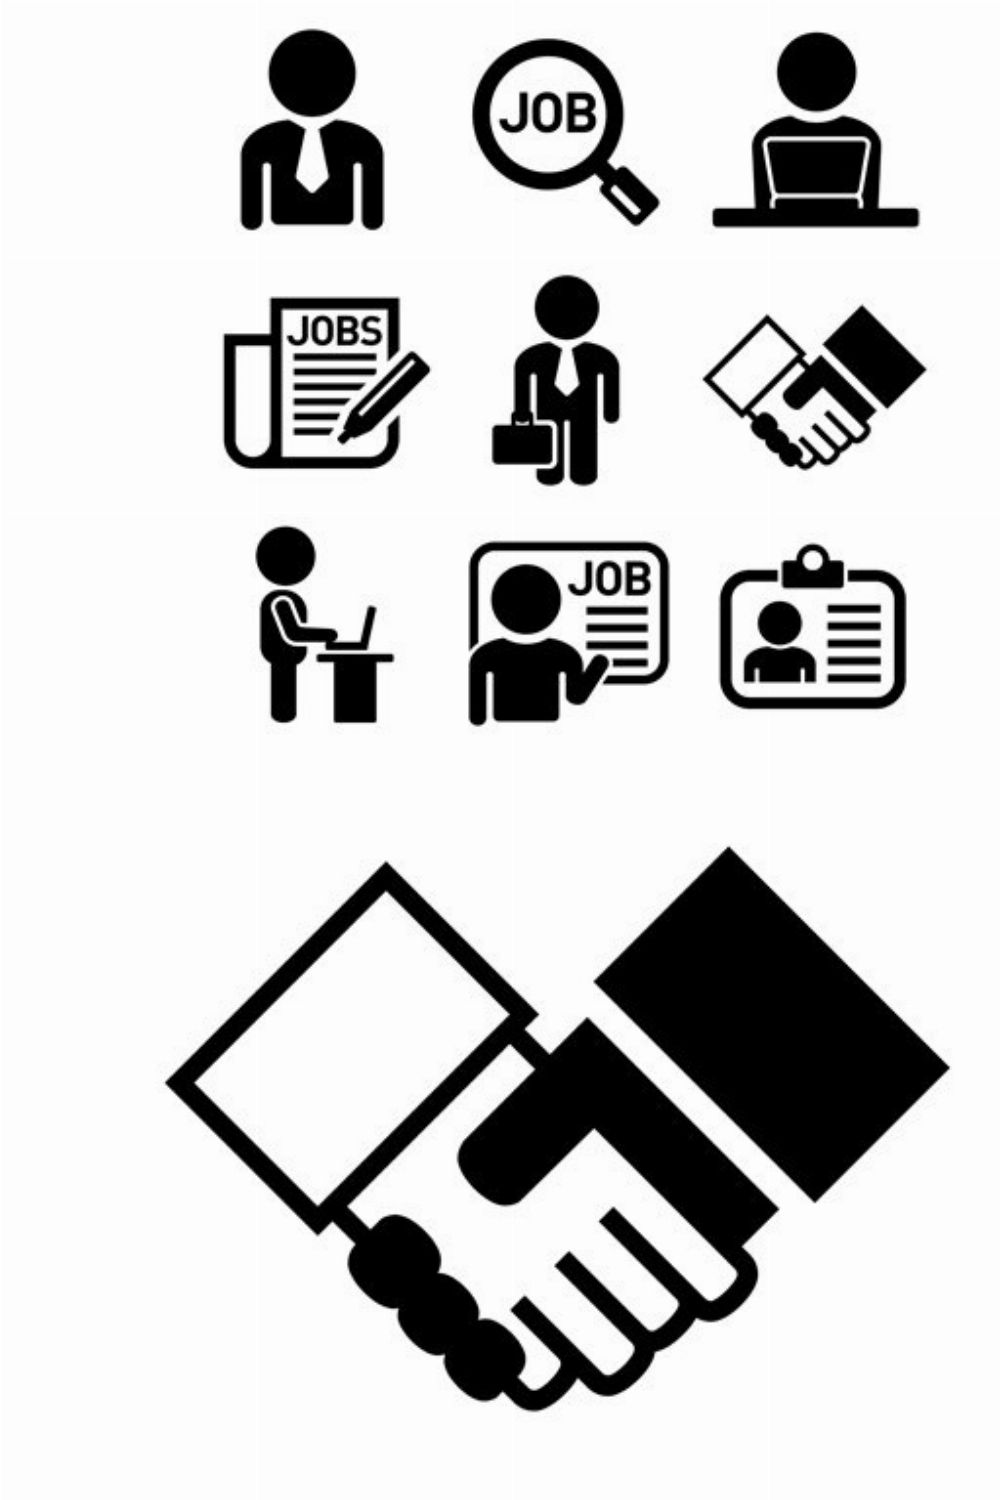 Human Job Resources Icons Set pinterest preview image.